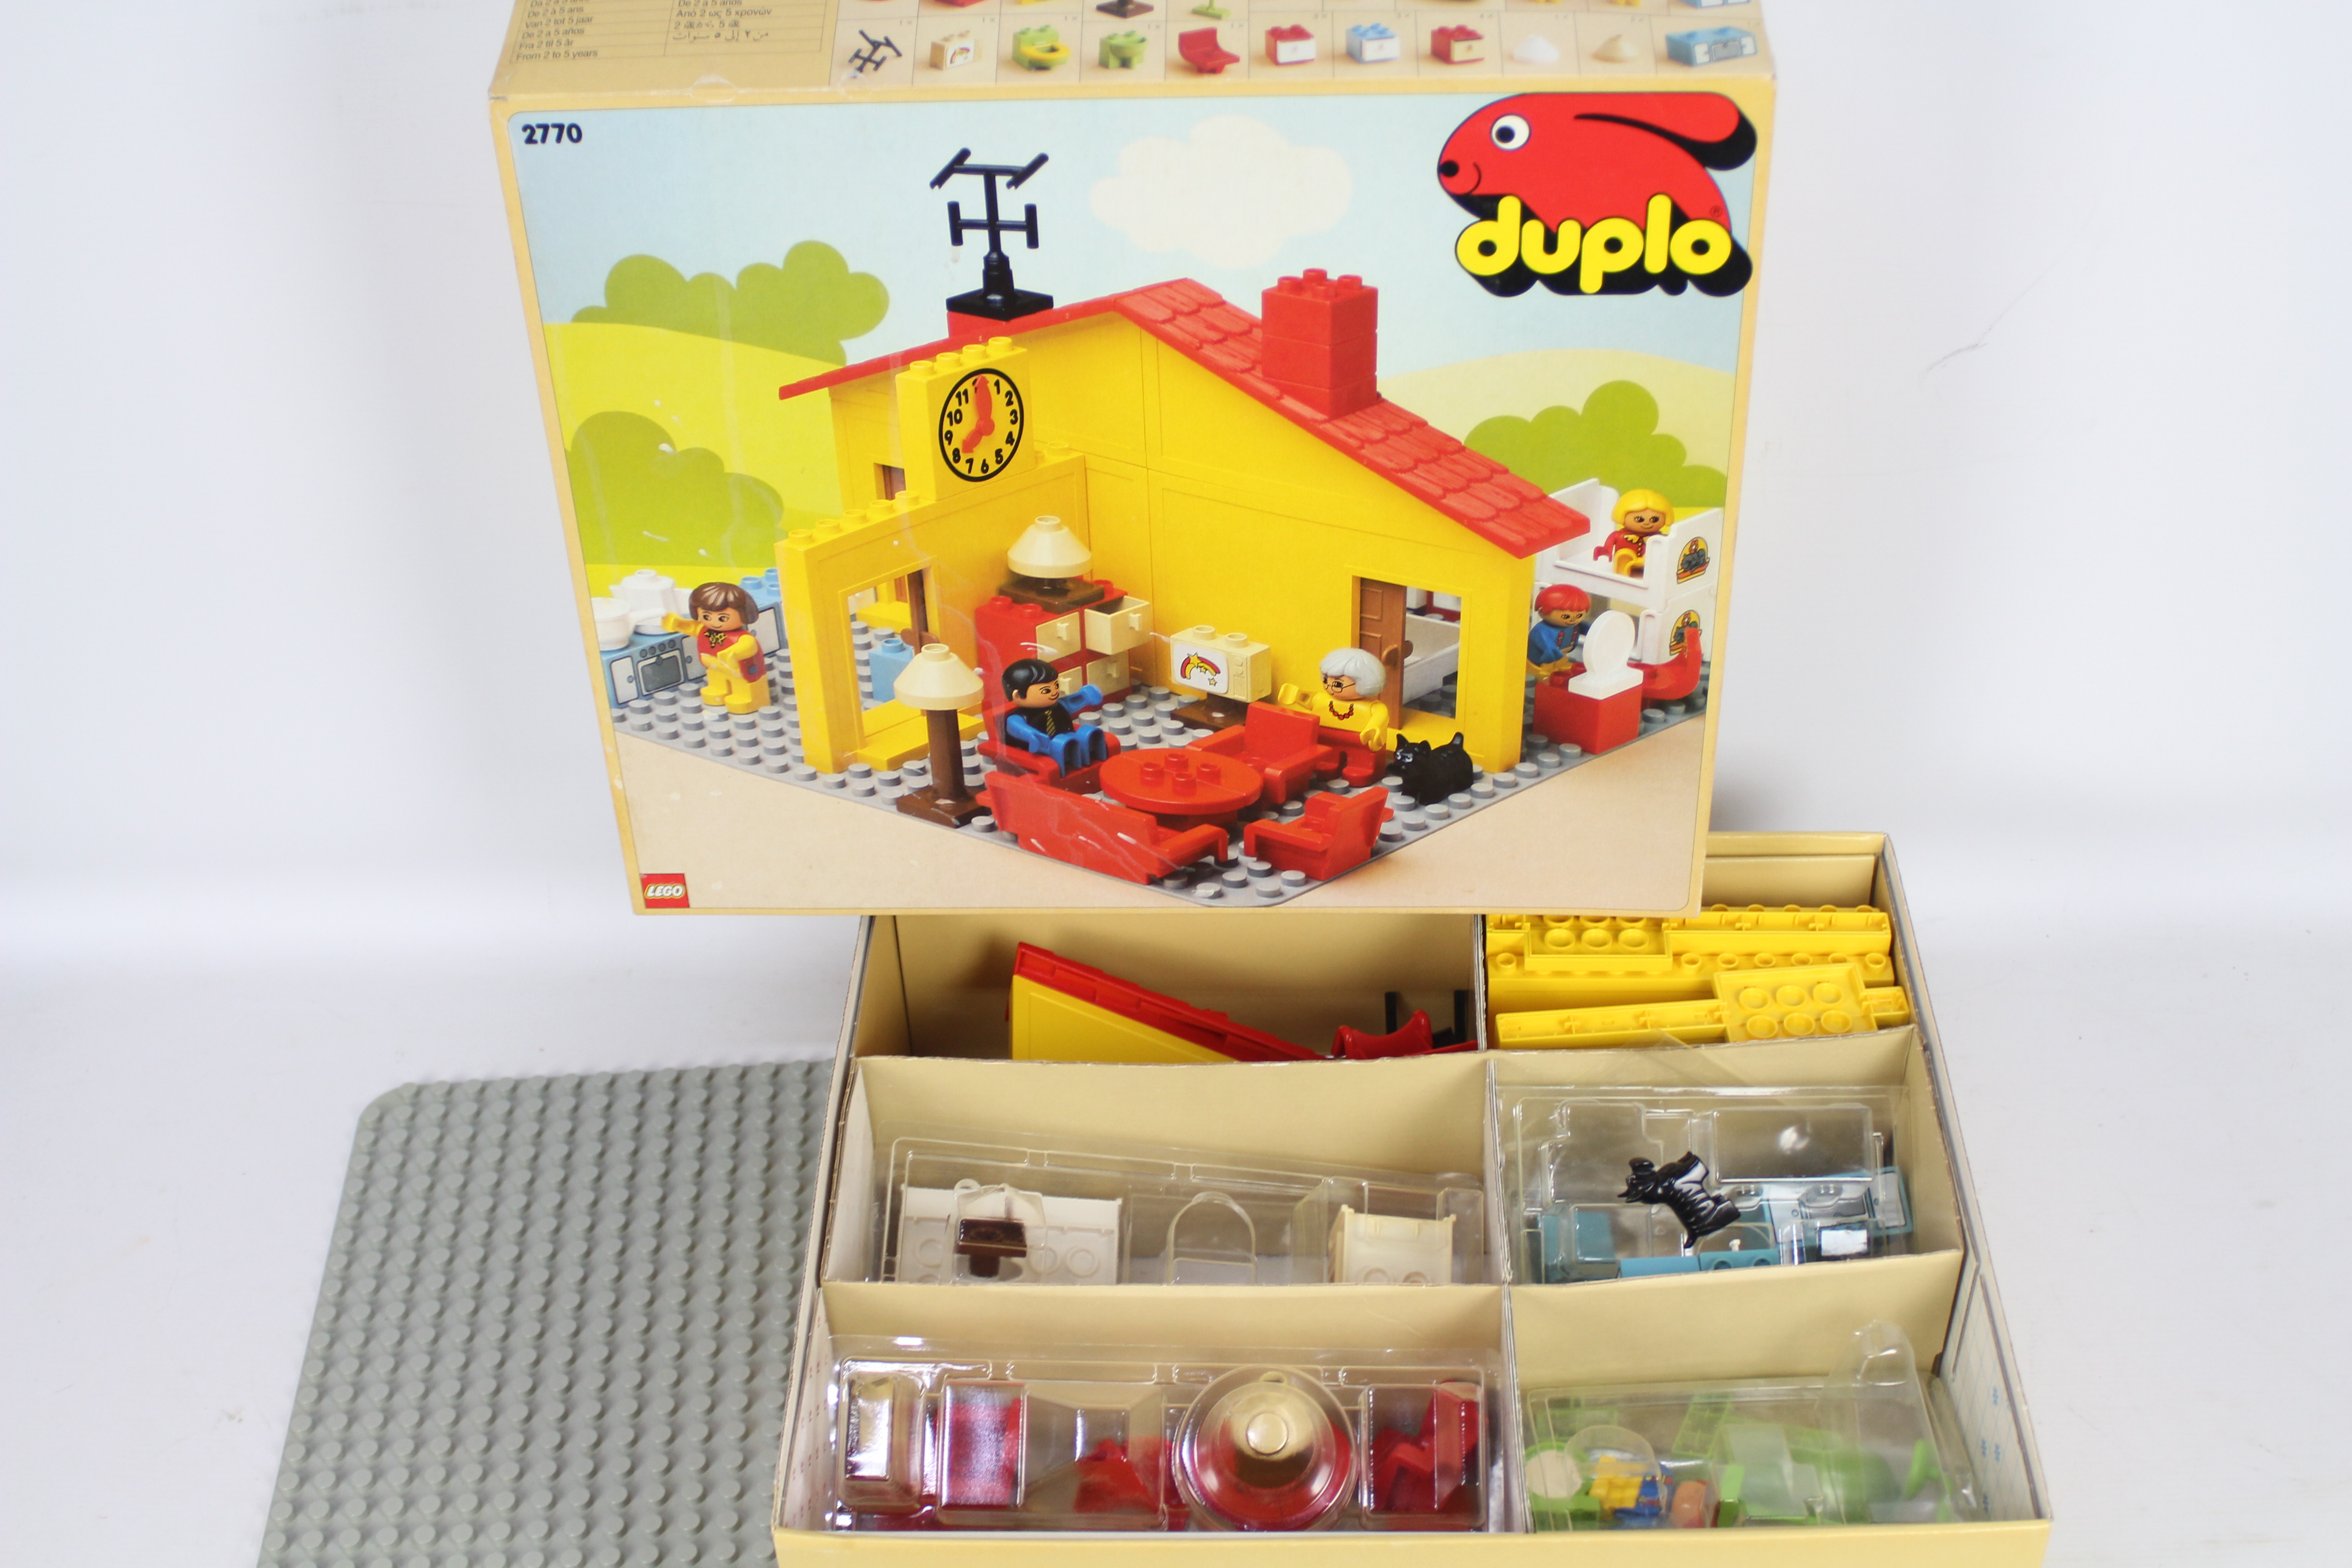 Lego Duplo - A boxed vintage 1986 Lego Duplo #2770 Play House.